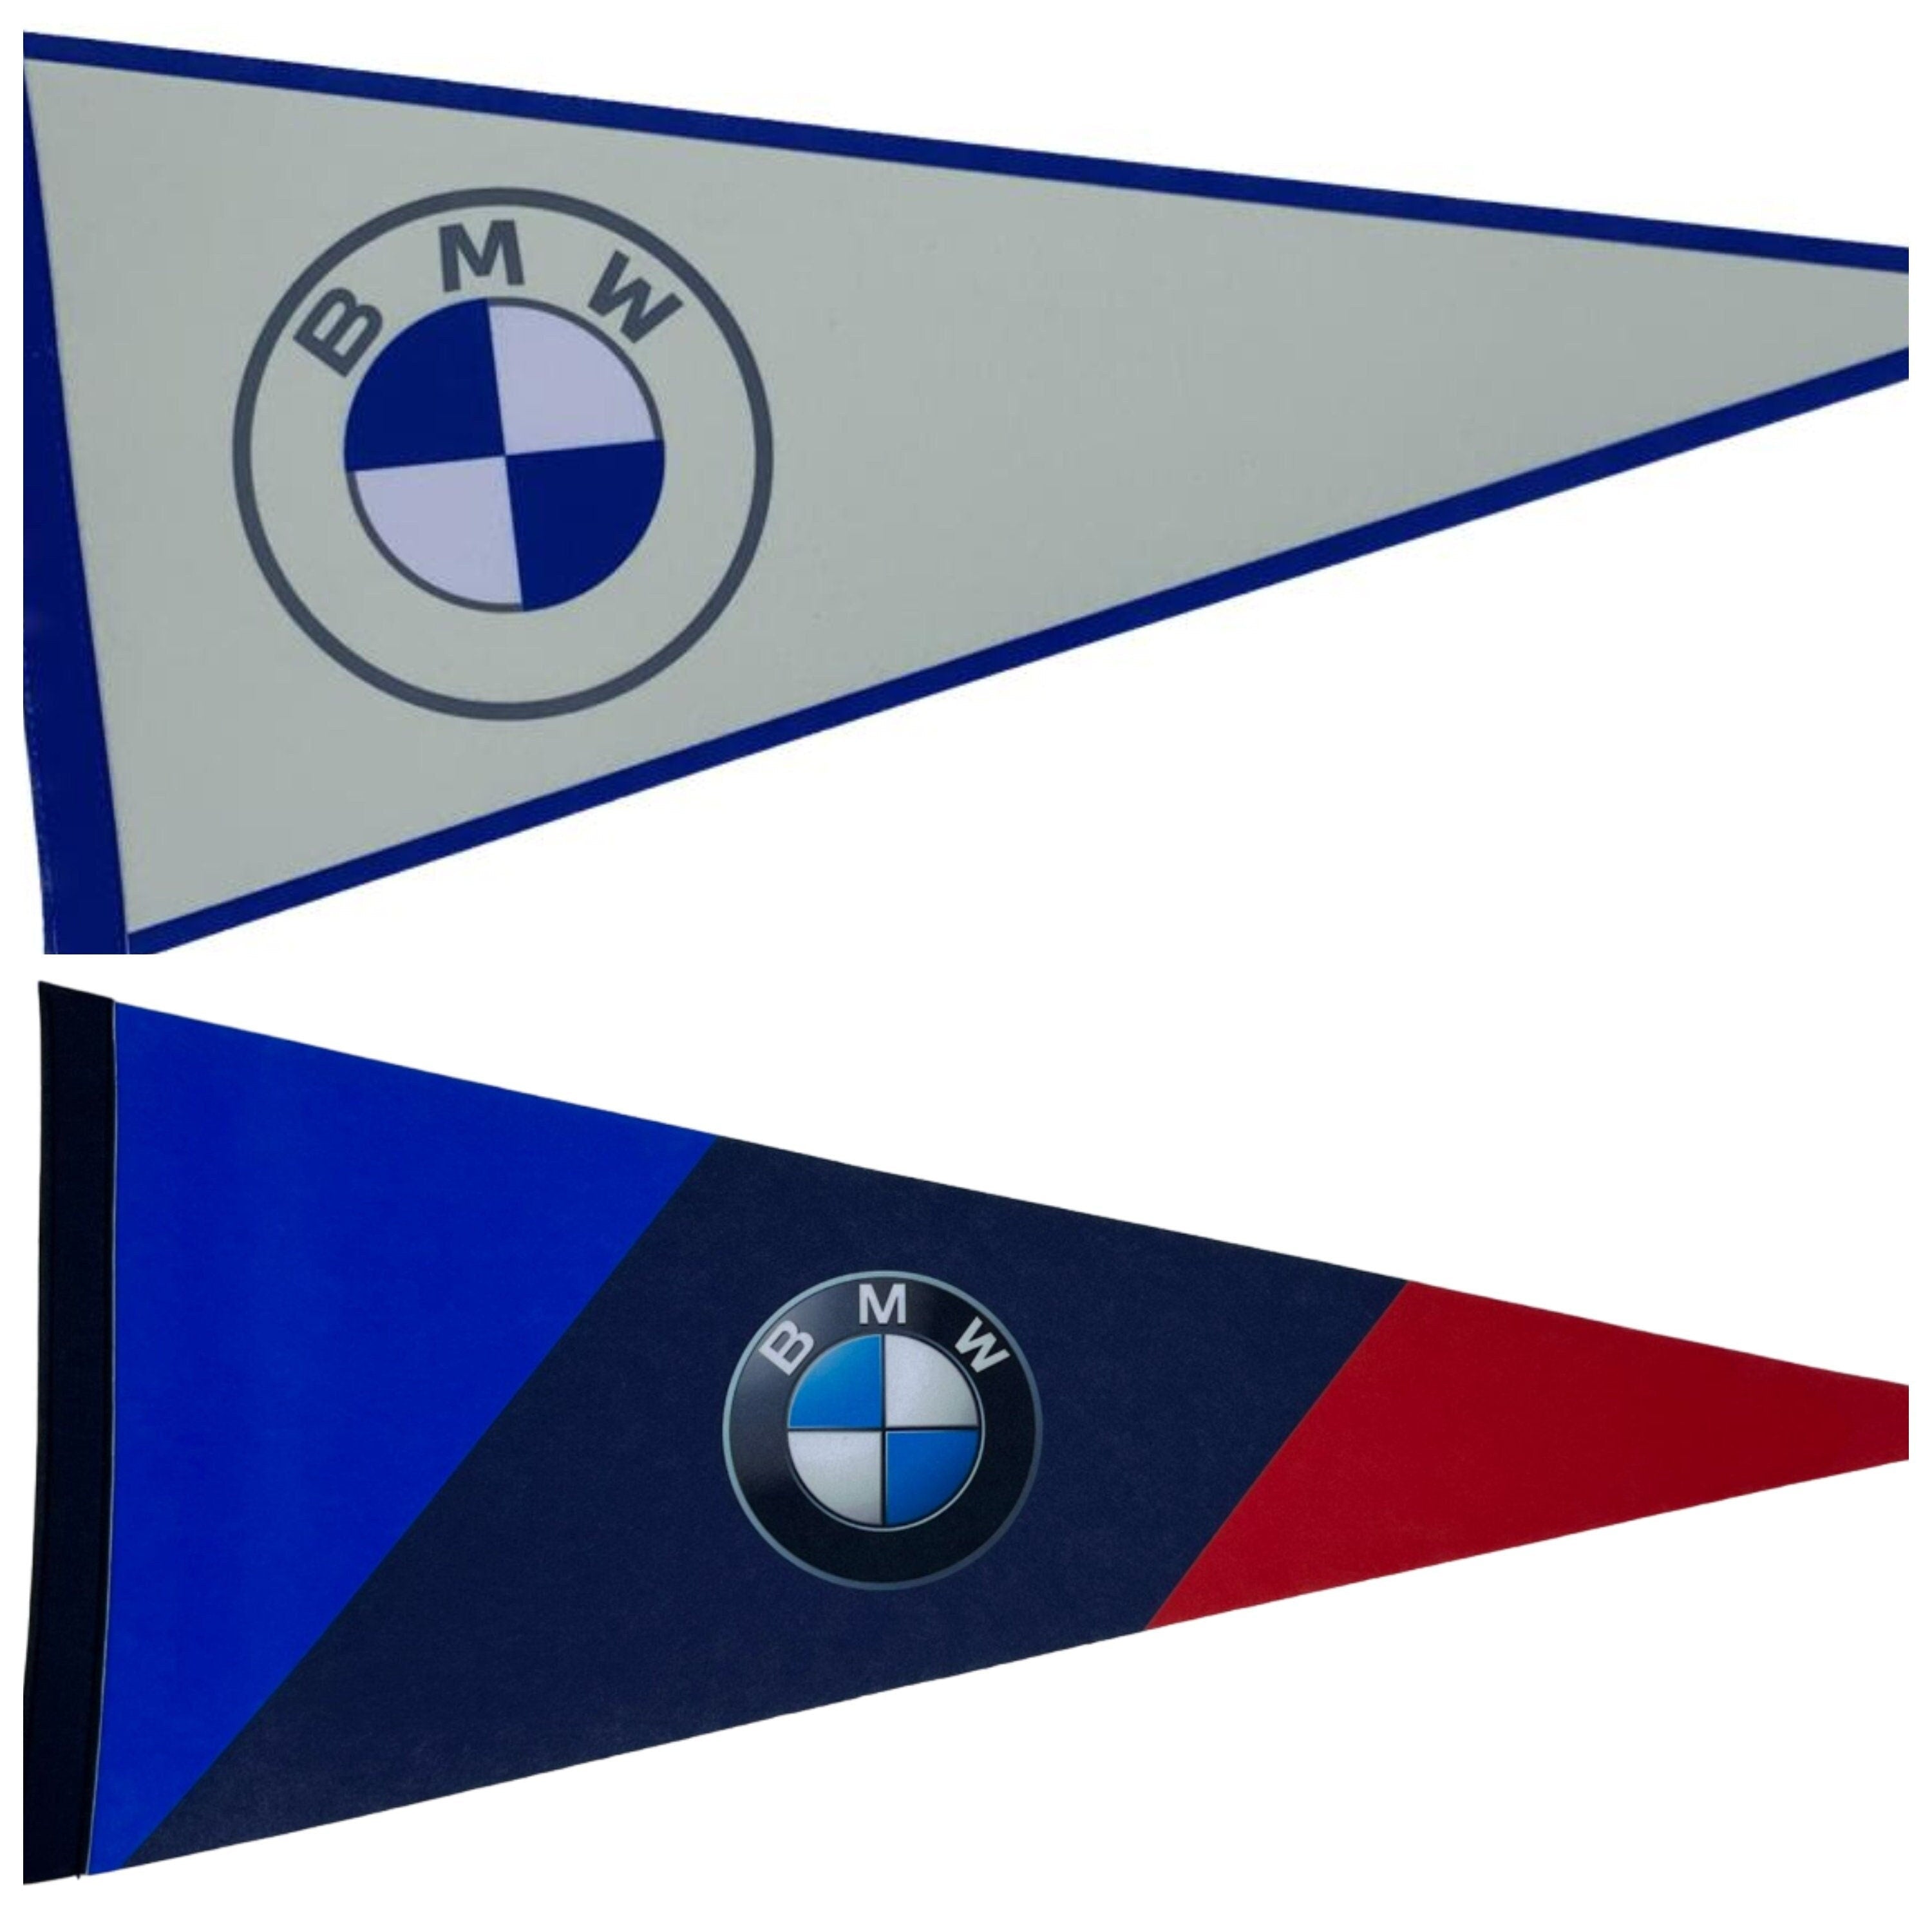 BMW car bmw logo bmw wimpels vaantje vlaggetje vlag fanion wimpel vlag wand decor german cars gifts audi gift auto bmw bayerische auto car - BMW m-logo